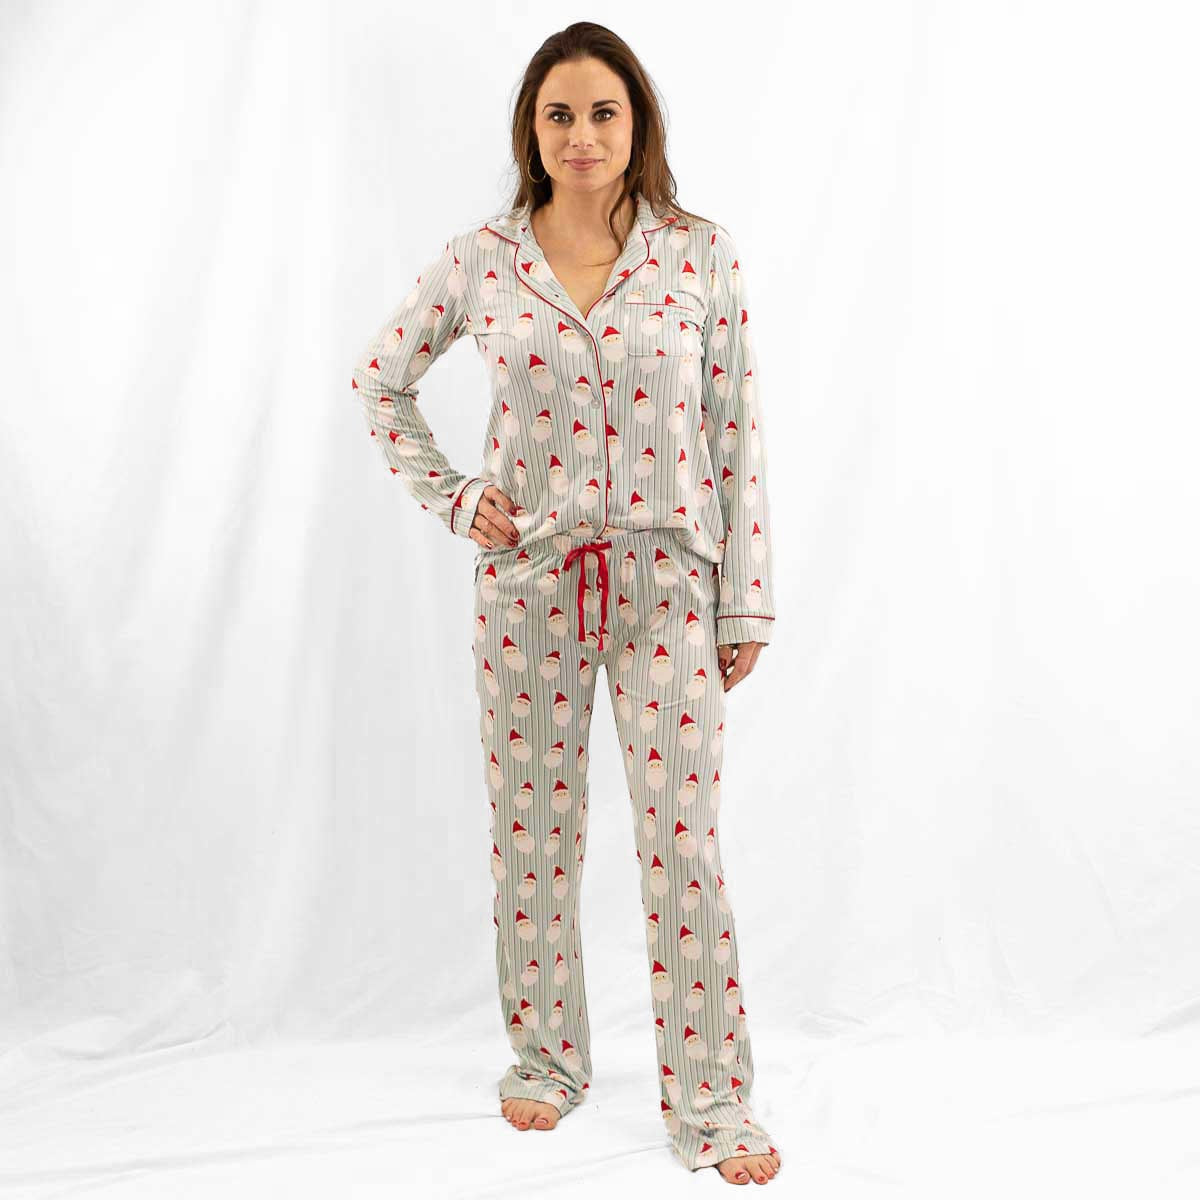 Women's Jolly Santa Pajama Set